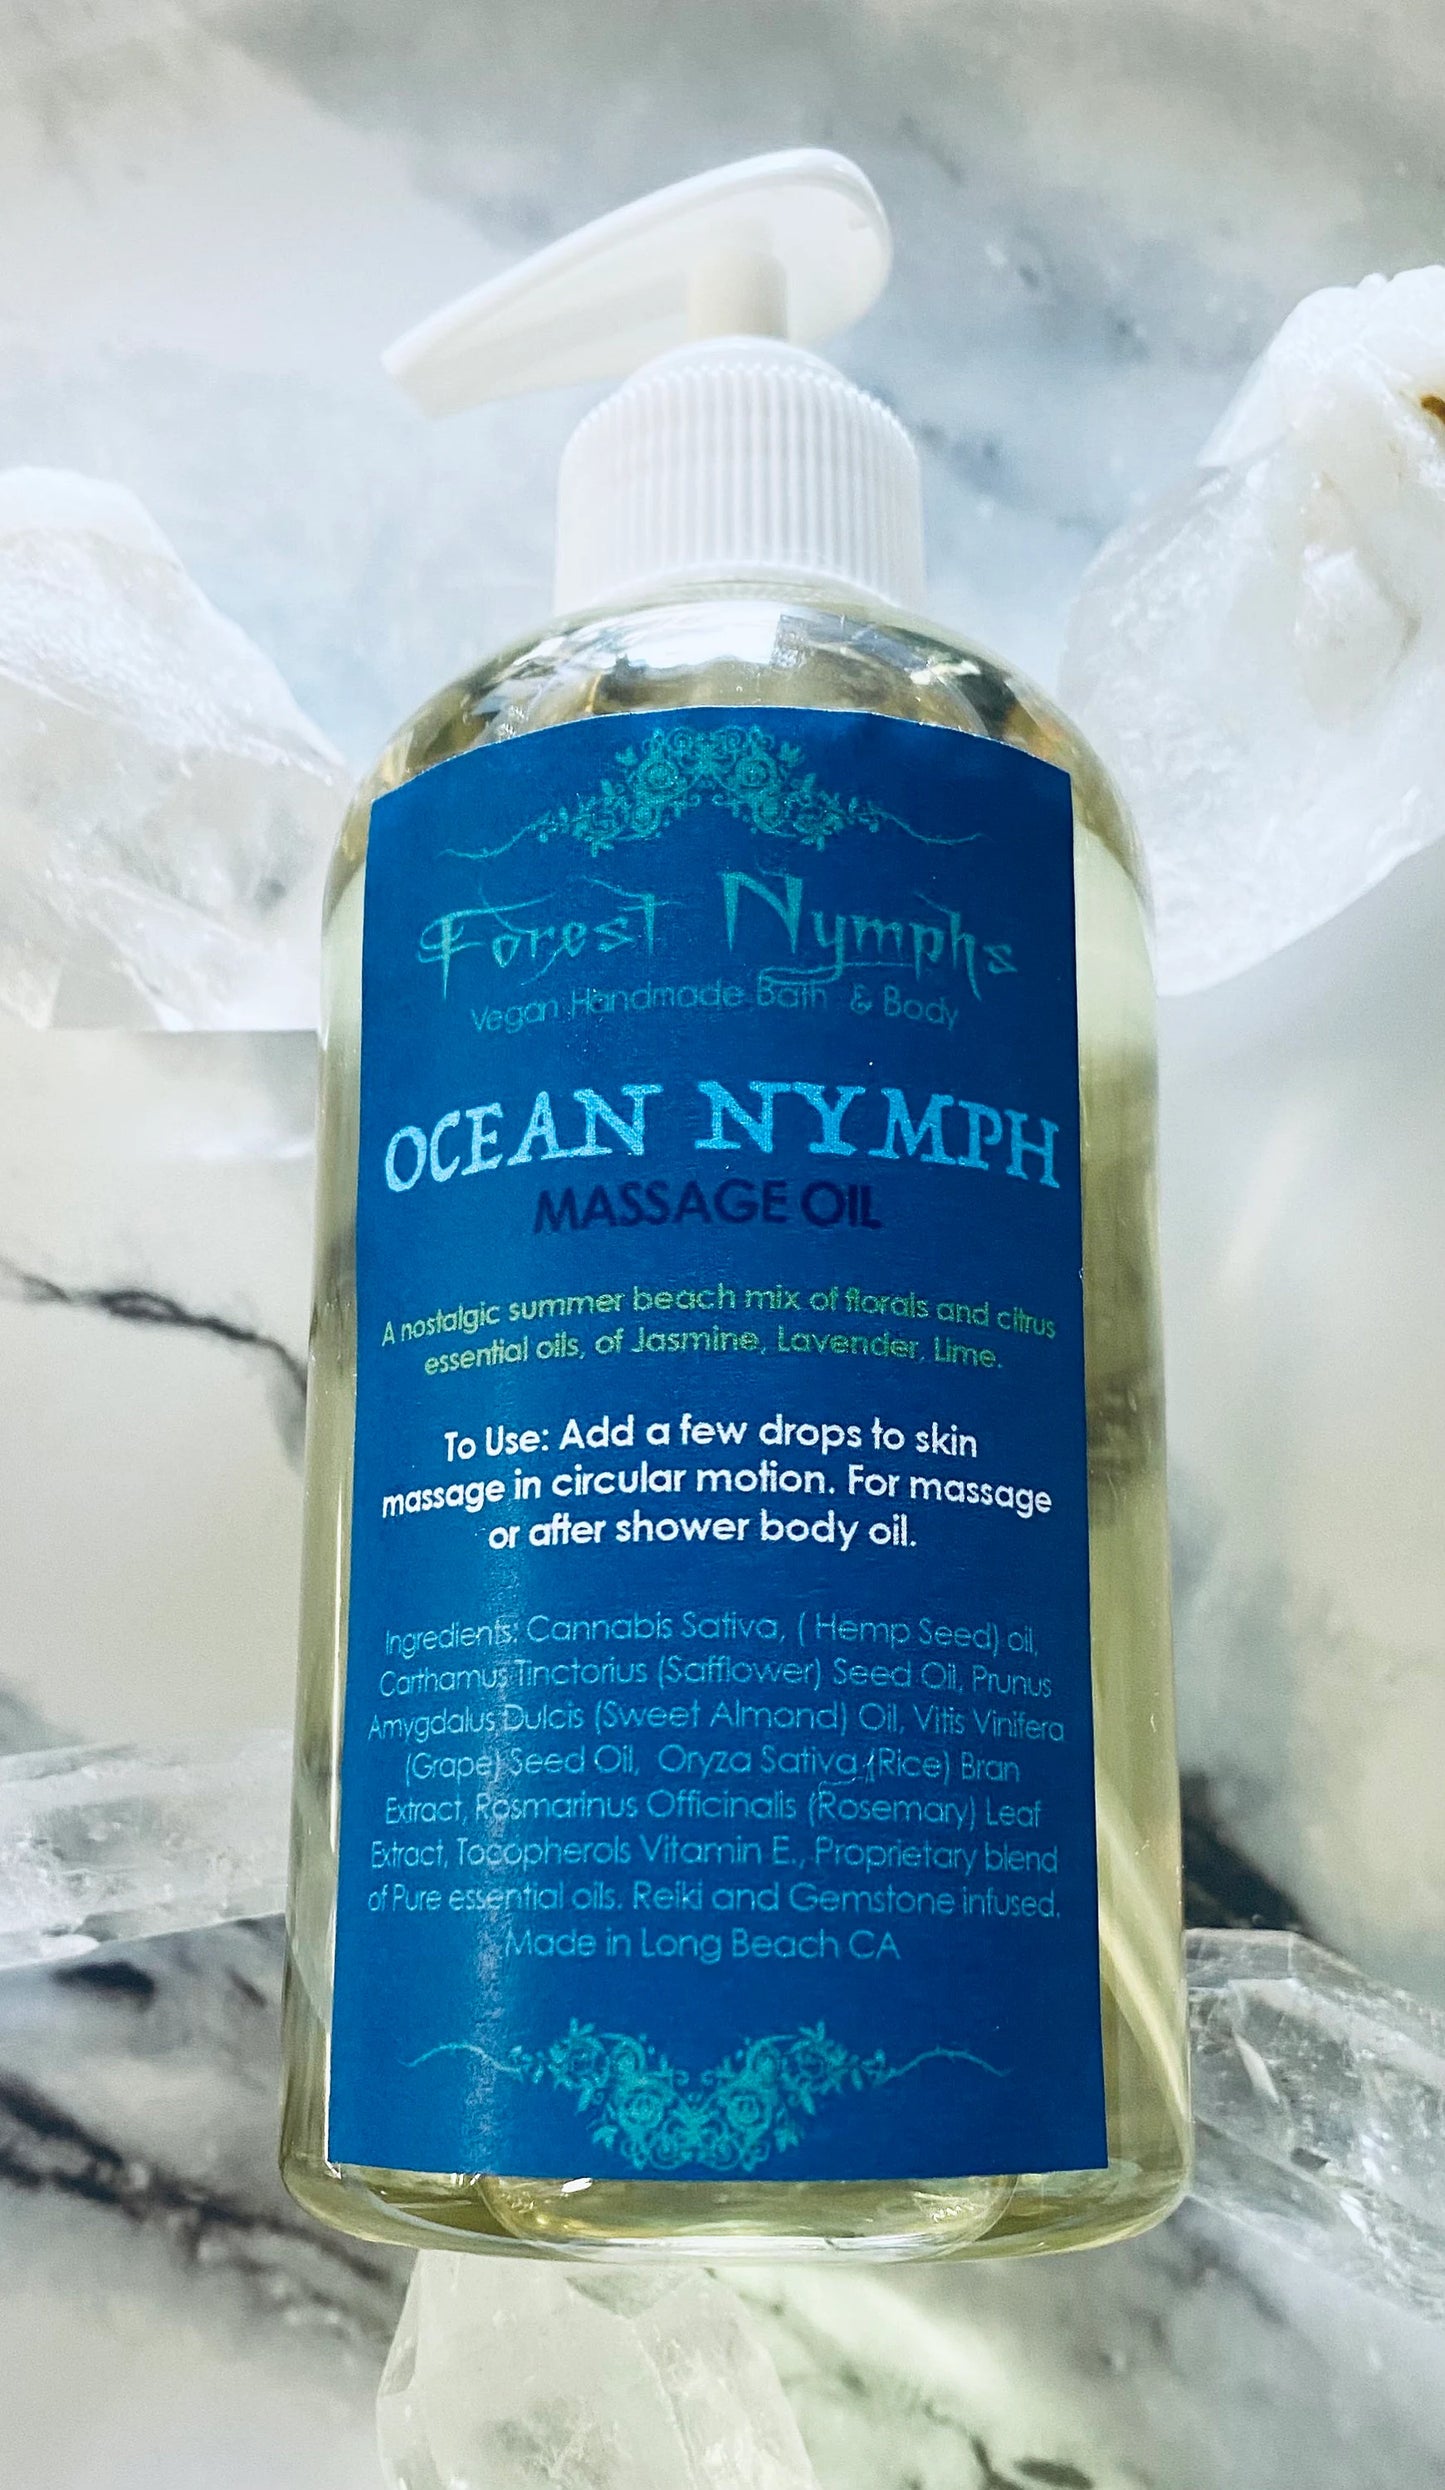 Ocean Nymph Massage Oil